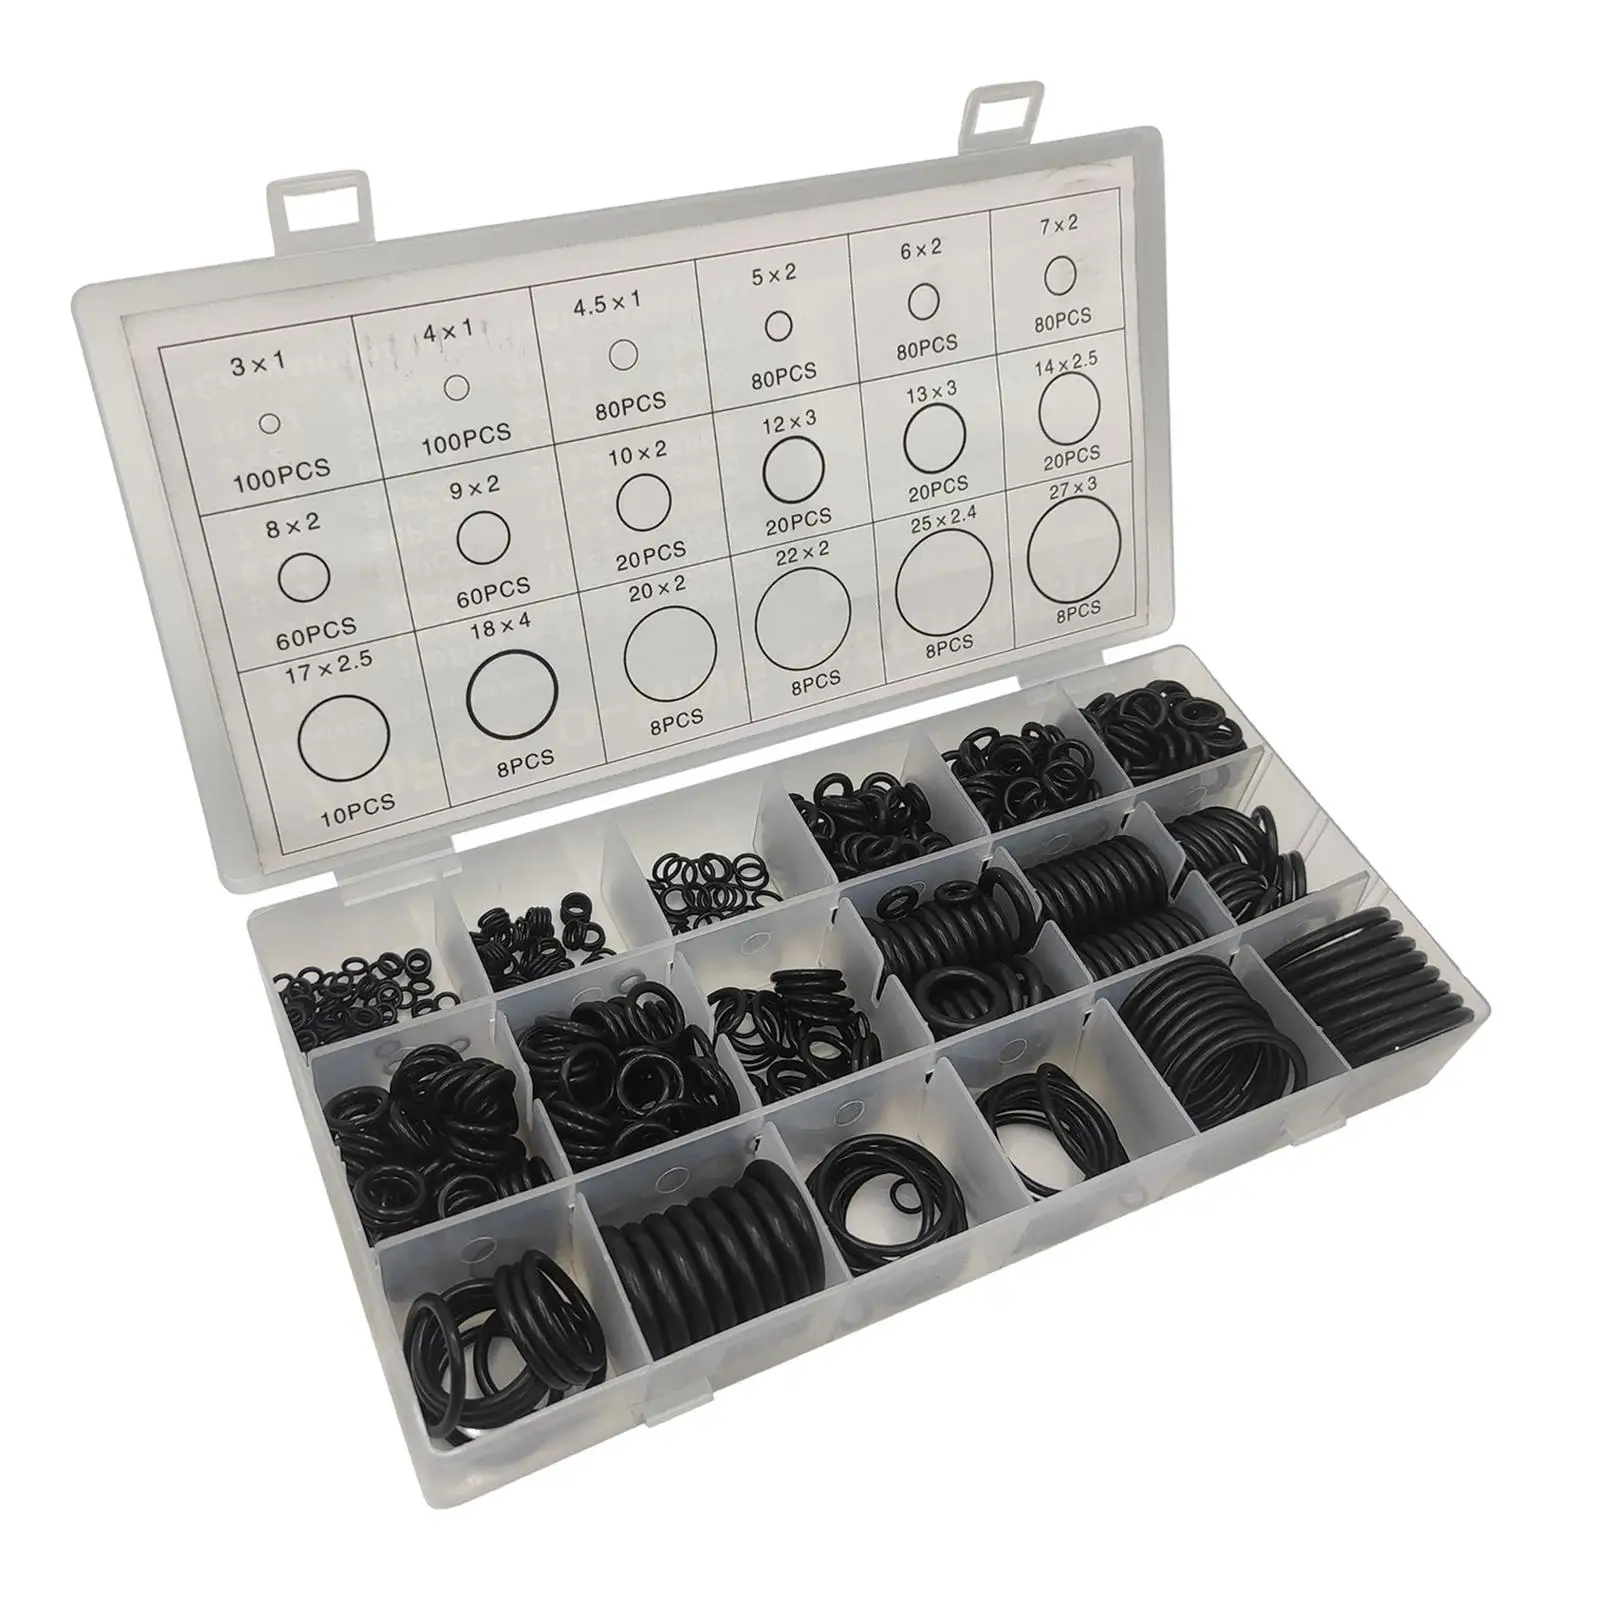 O Ring Assortment Kits Sealing Gasket Washers for Plumbing Washer Seal Professional Plumbing